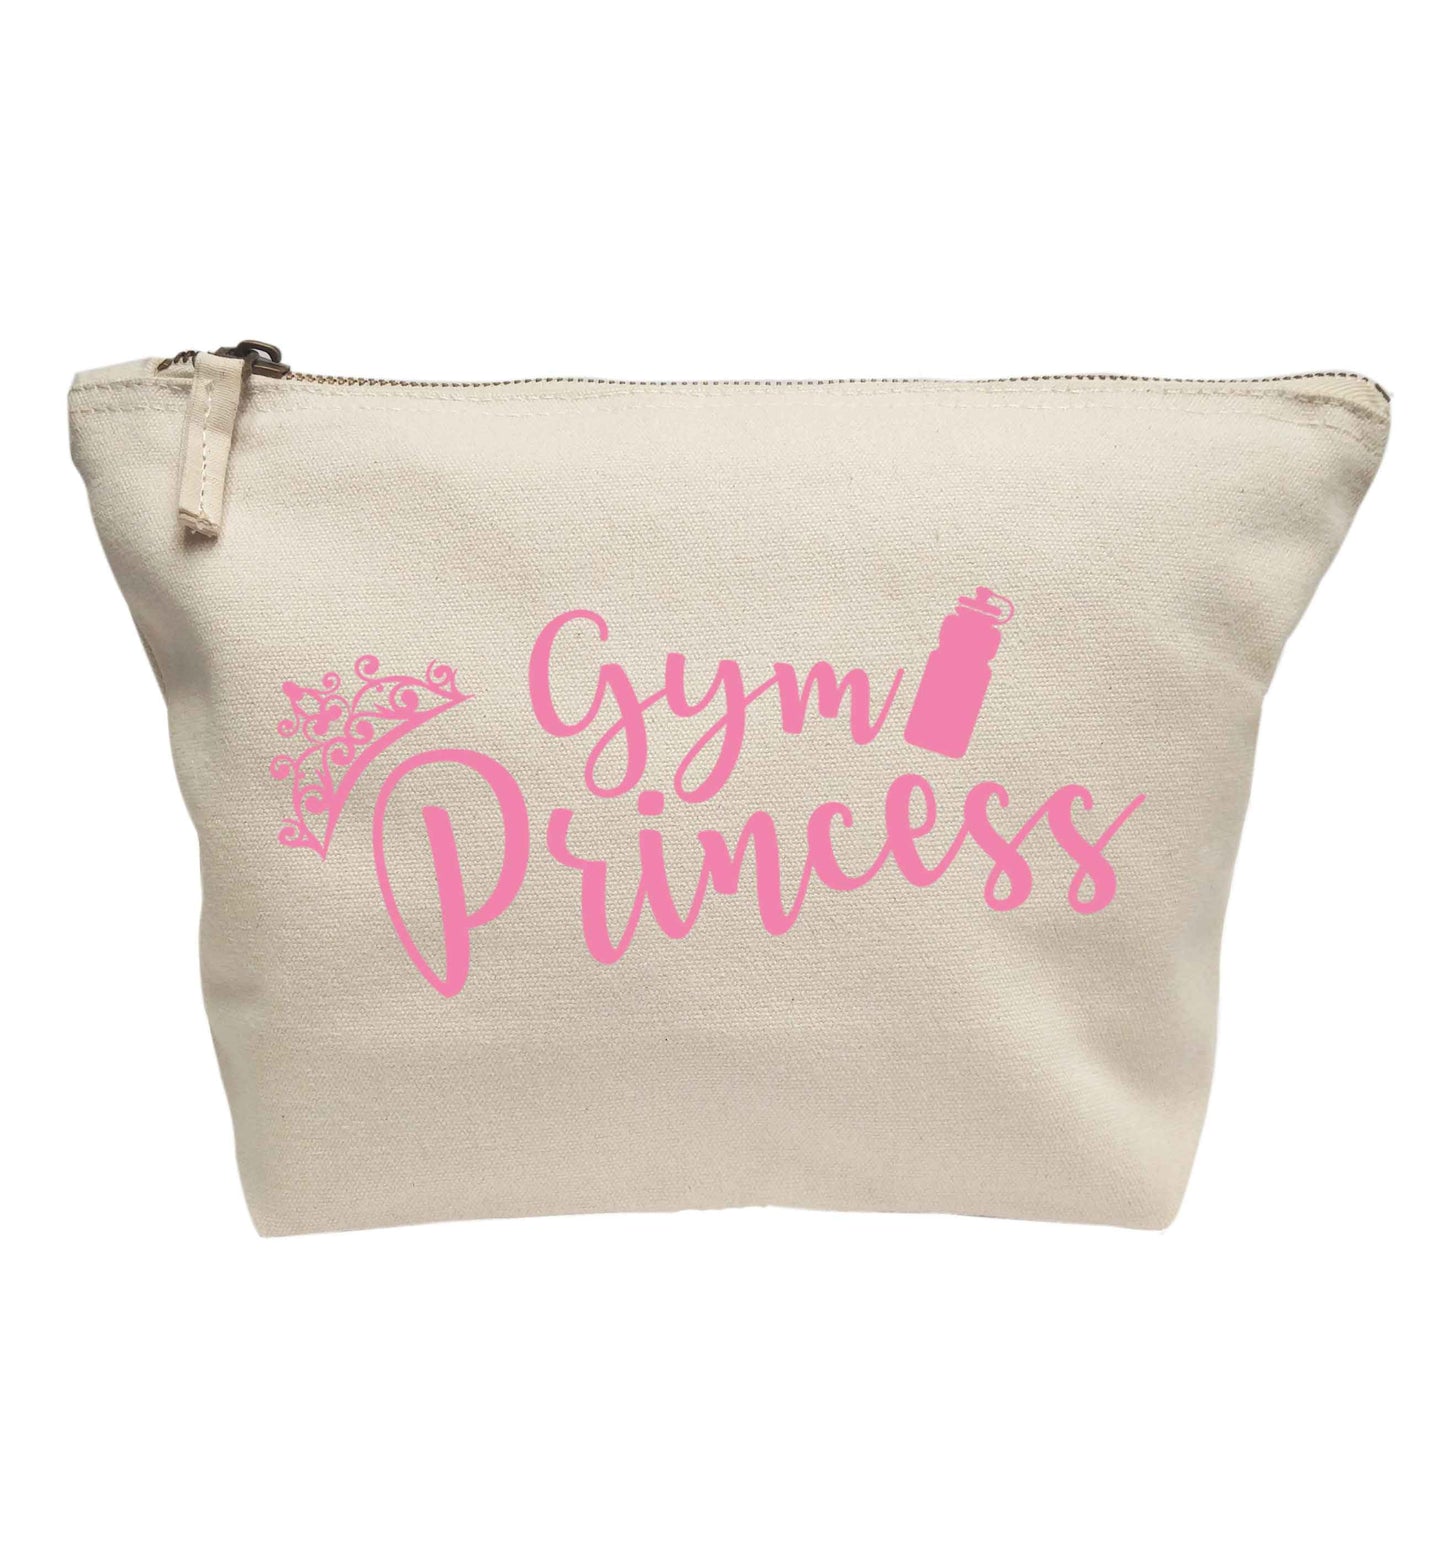 Gym princess | makeup / wash bag